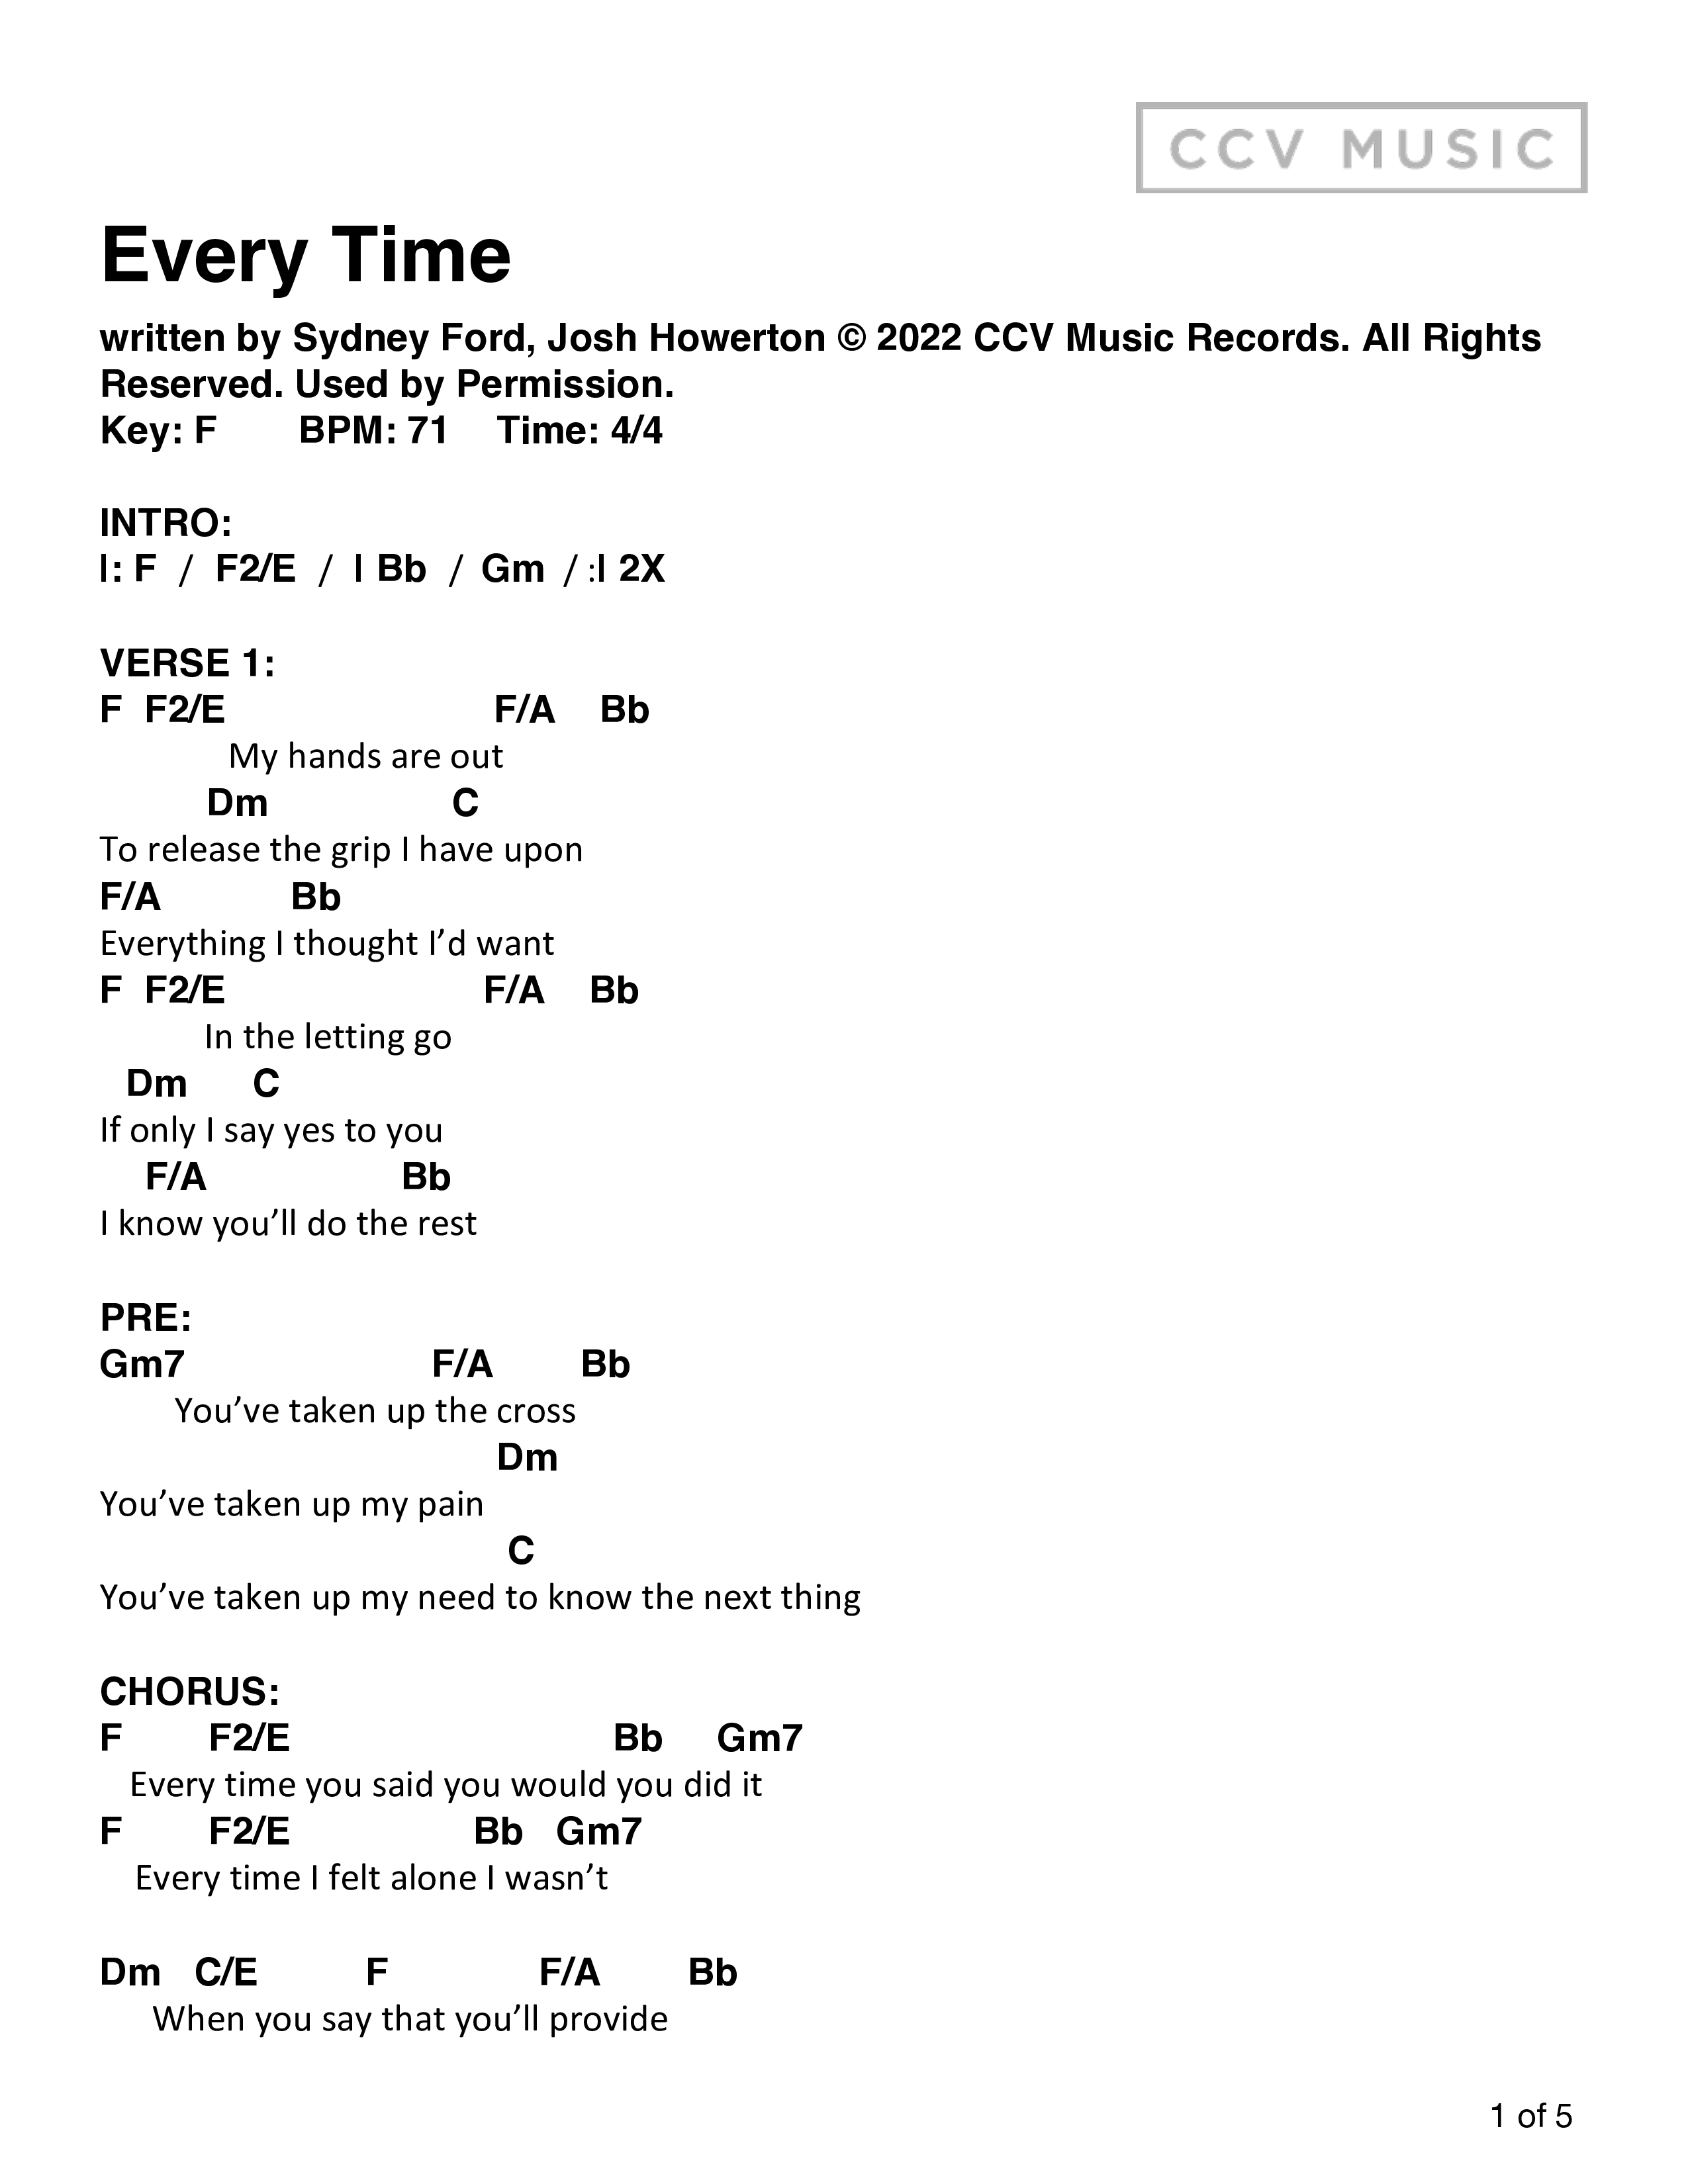 Every Time (Live) Chord Chart (CCV Music)